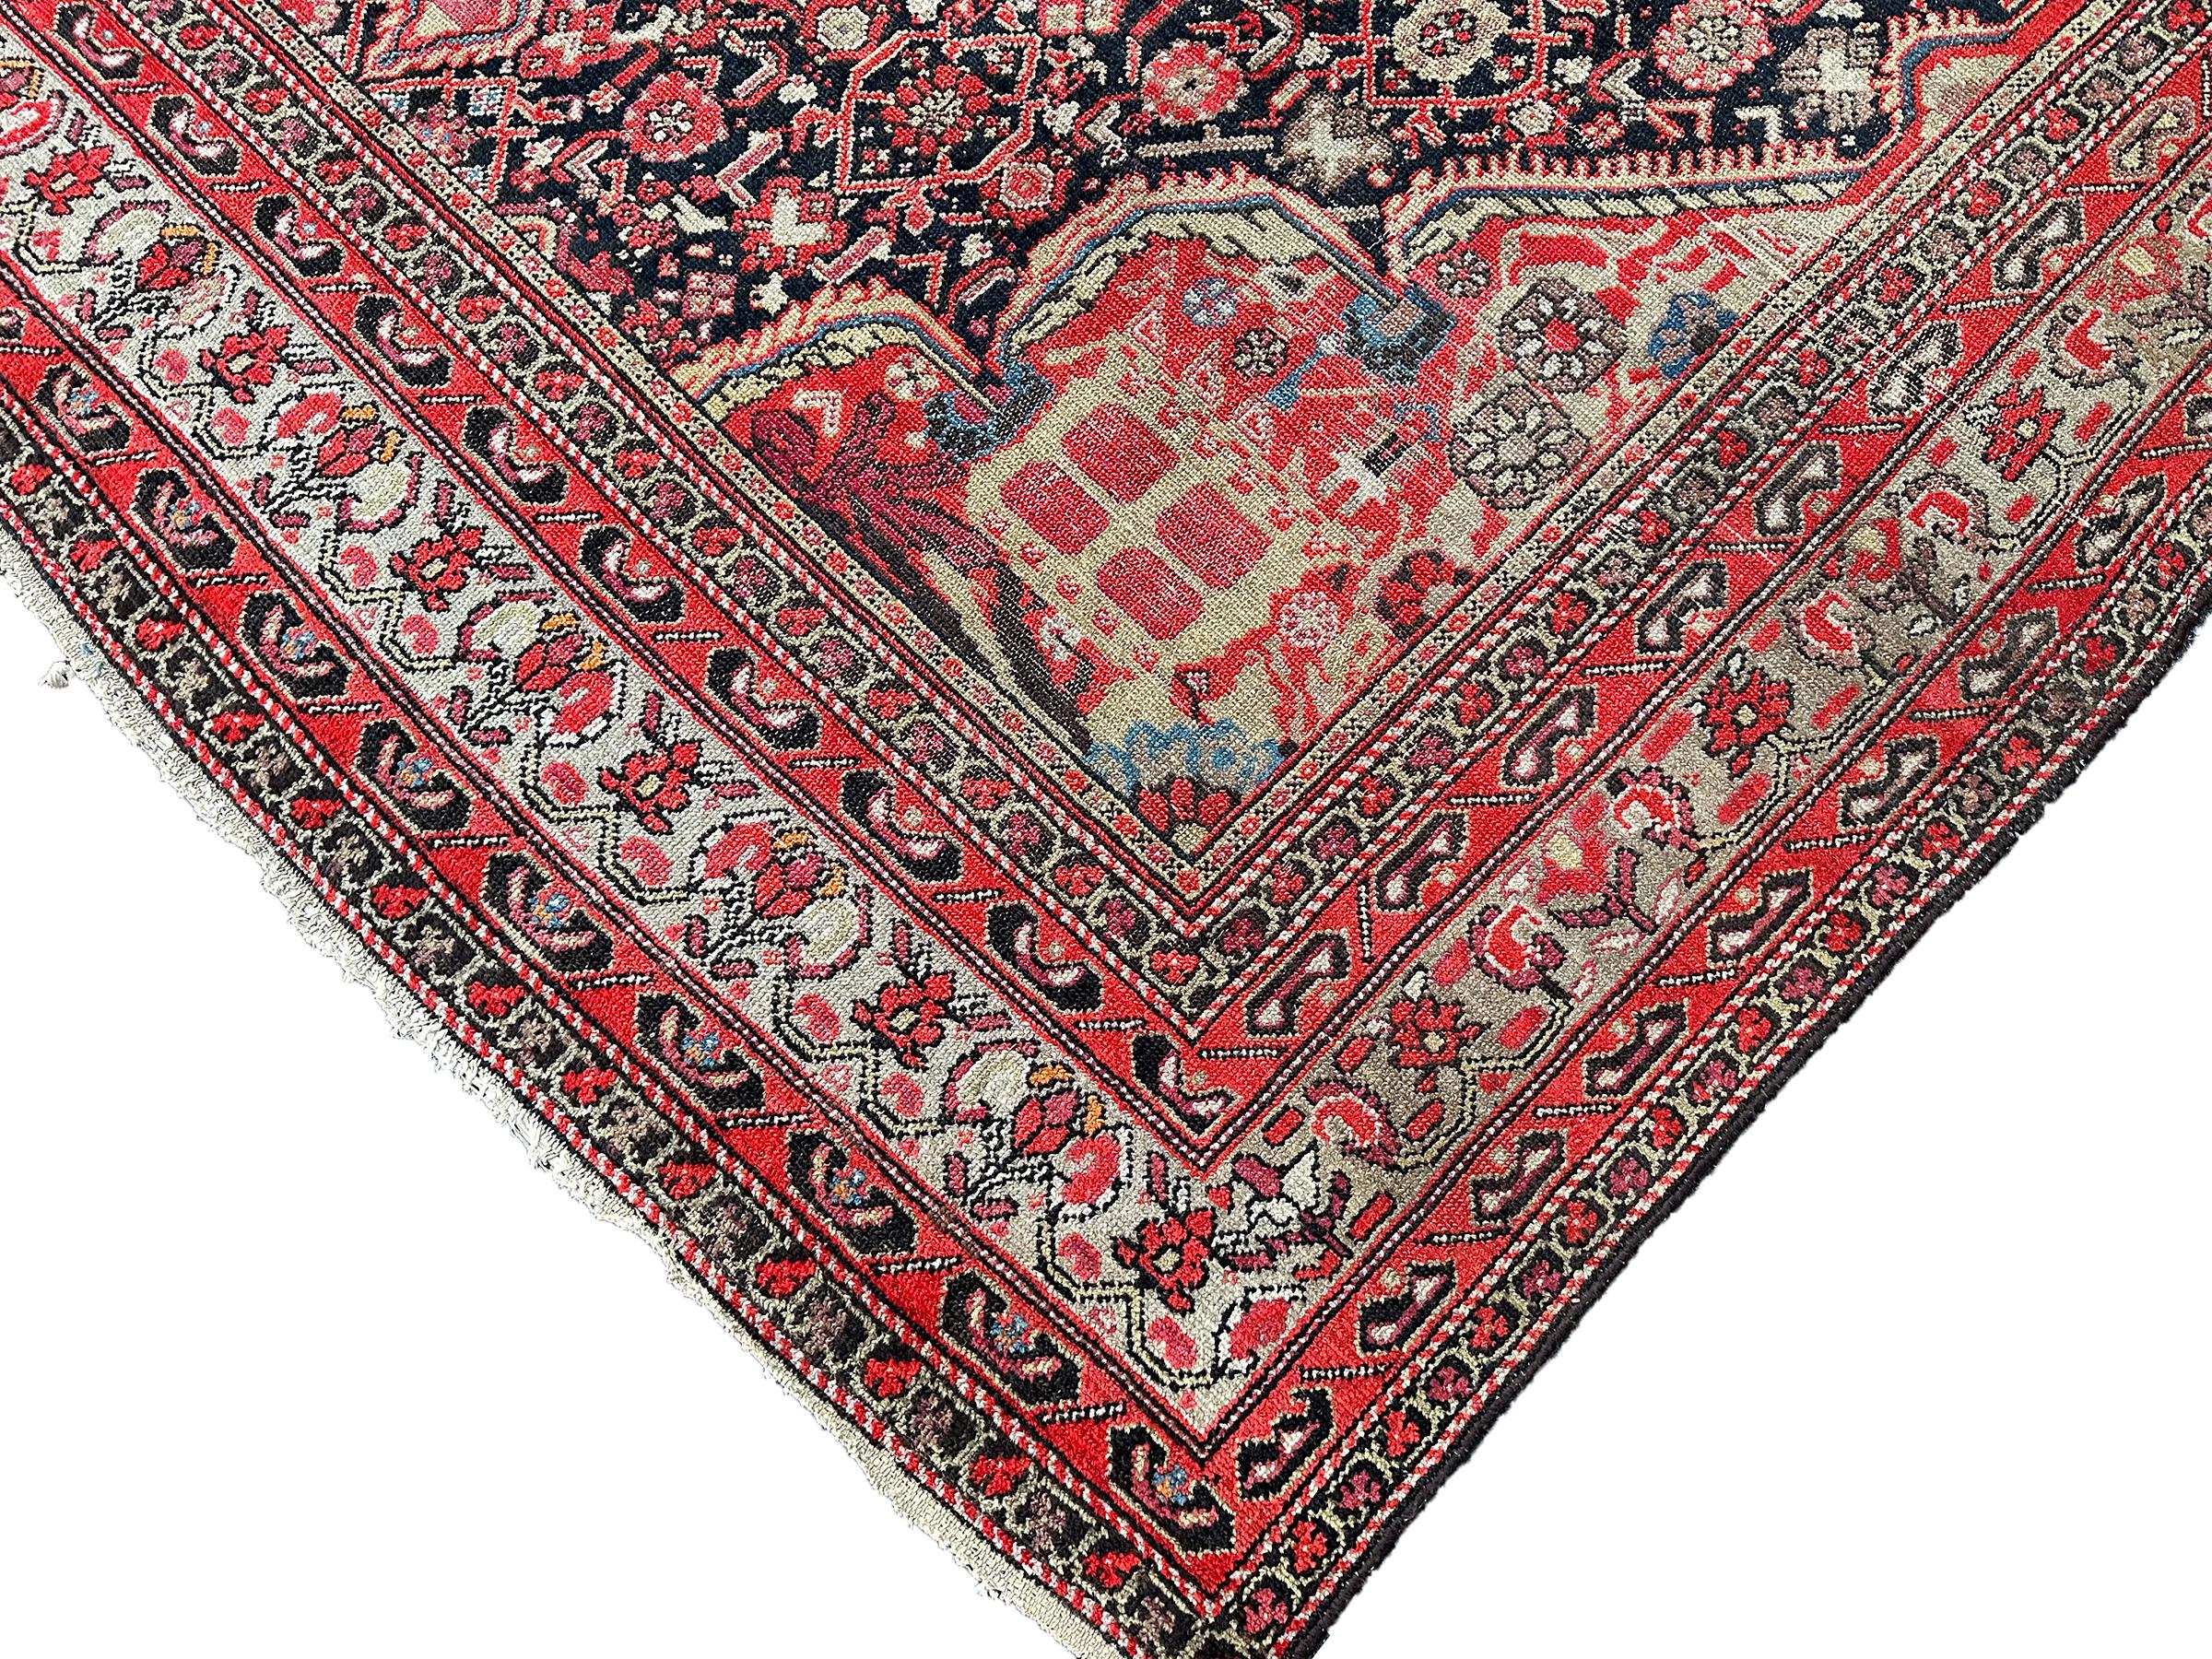 Wool Antique Persian Mahal Sultanabad Rug 1880 Geometric 9x17 Handmade 257cm x 511cm For Sale